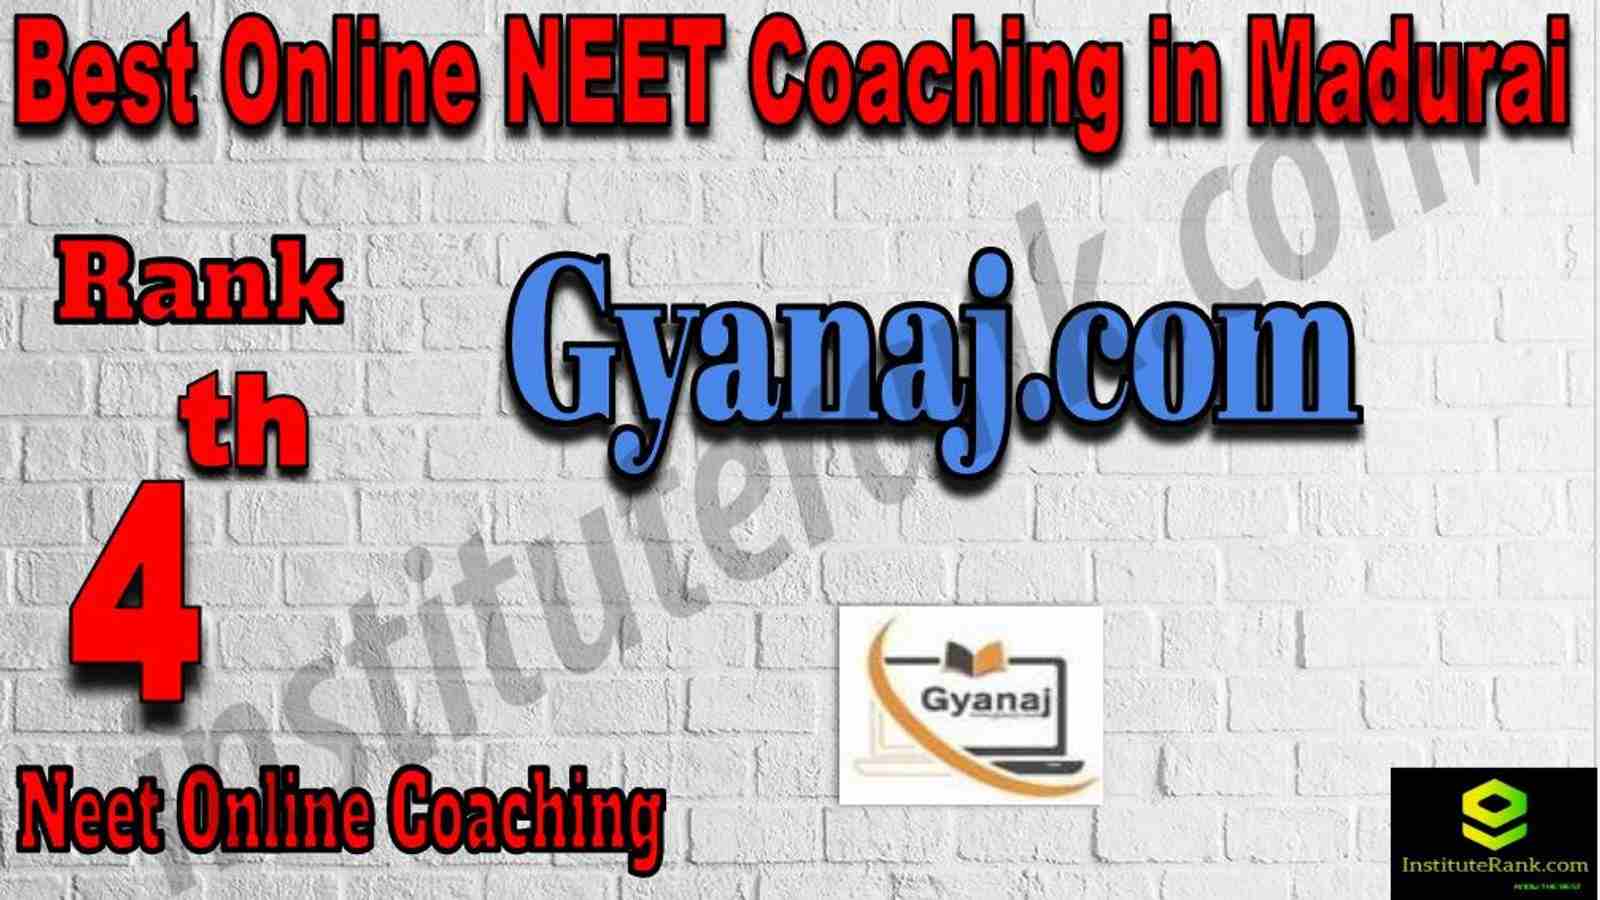 4th Best Online Neet Coaching in Madurai